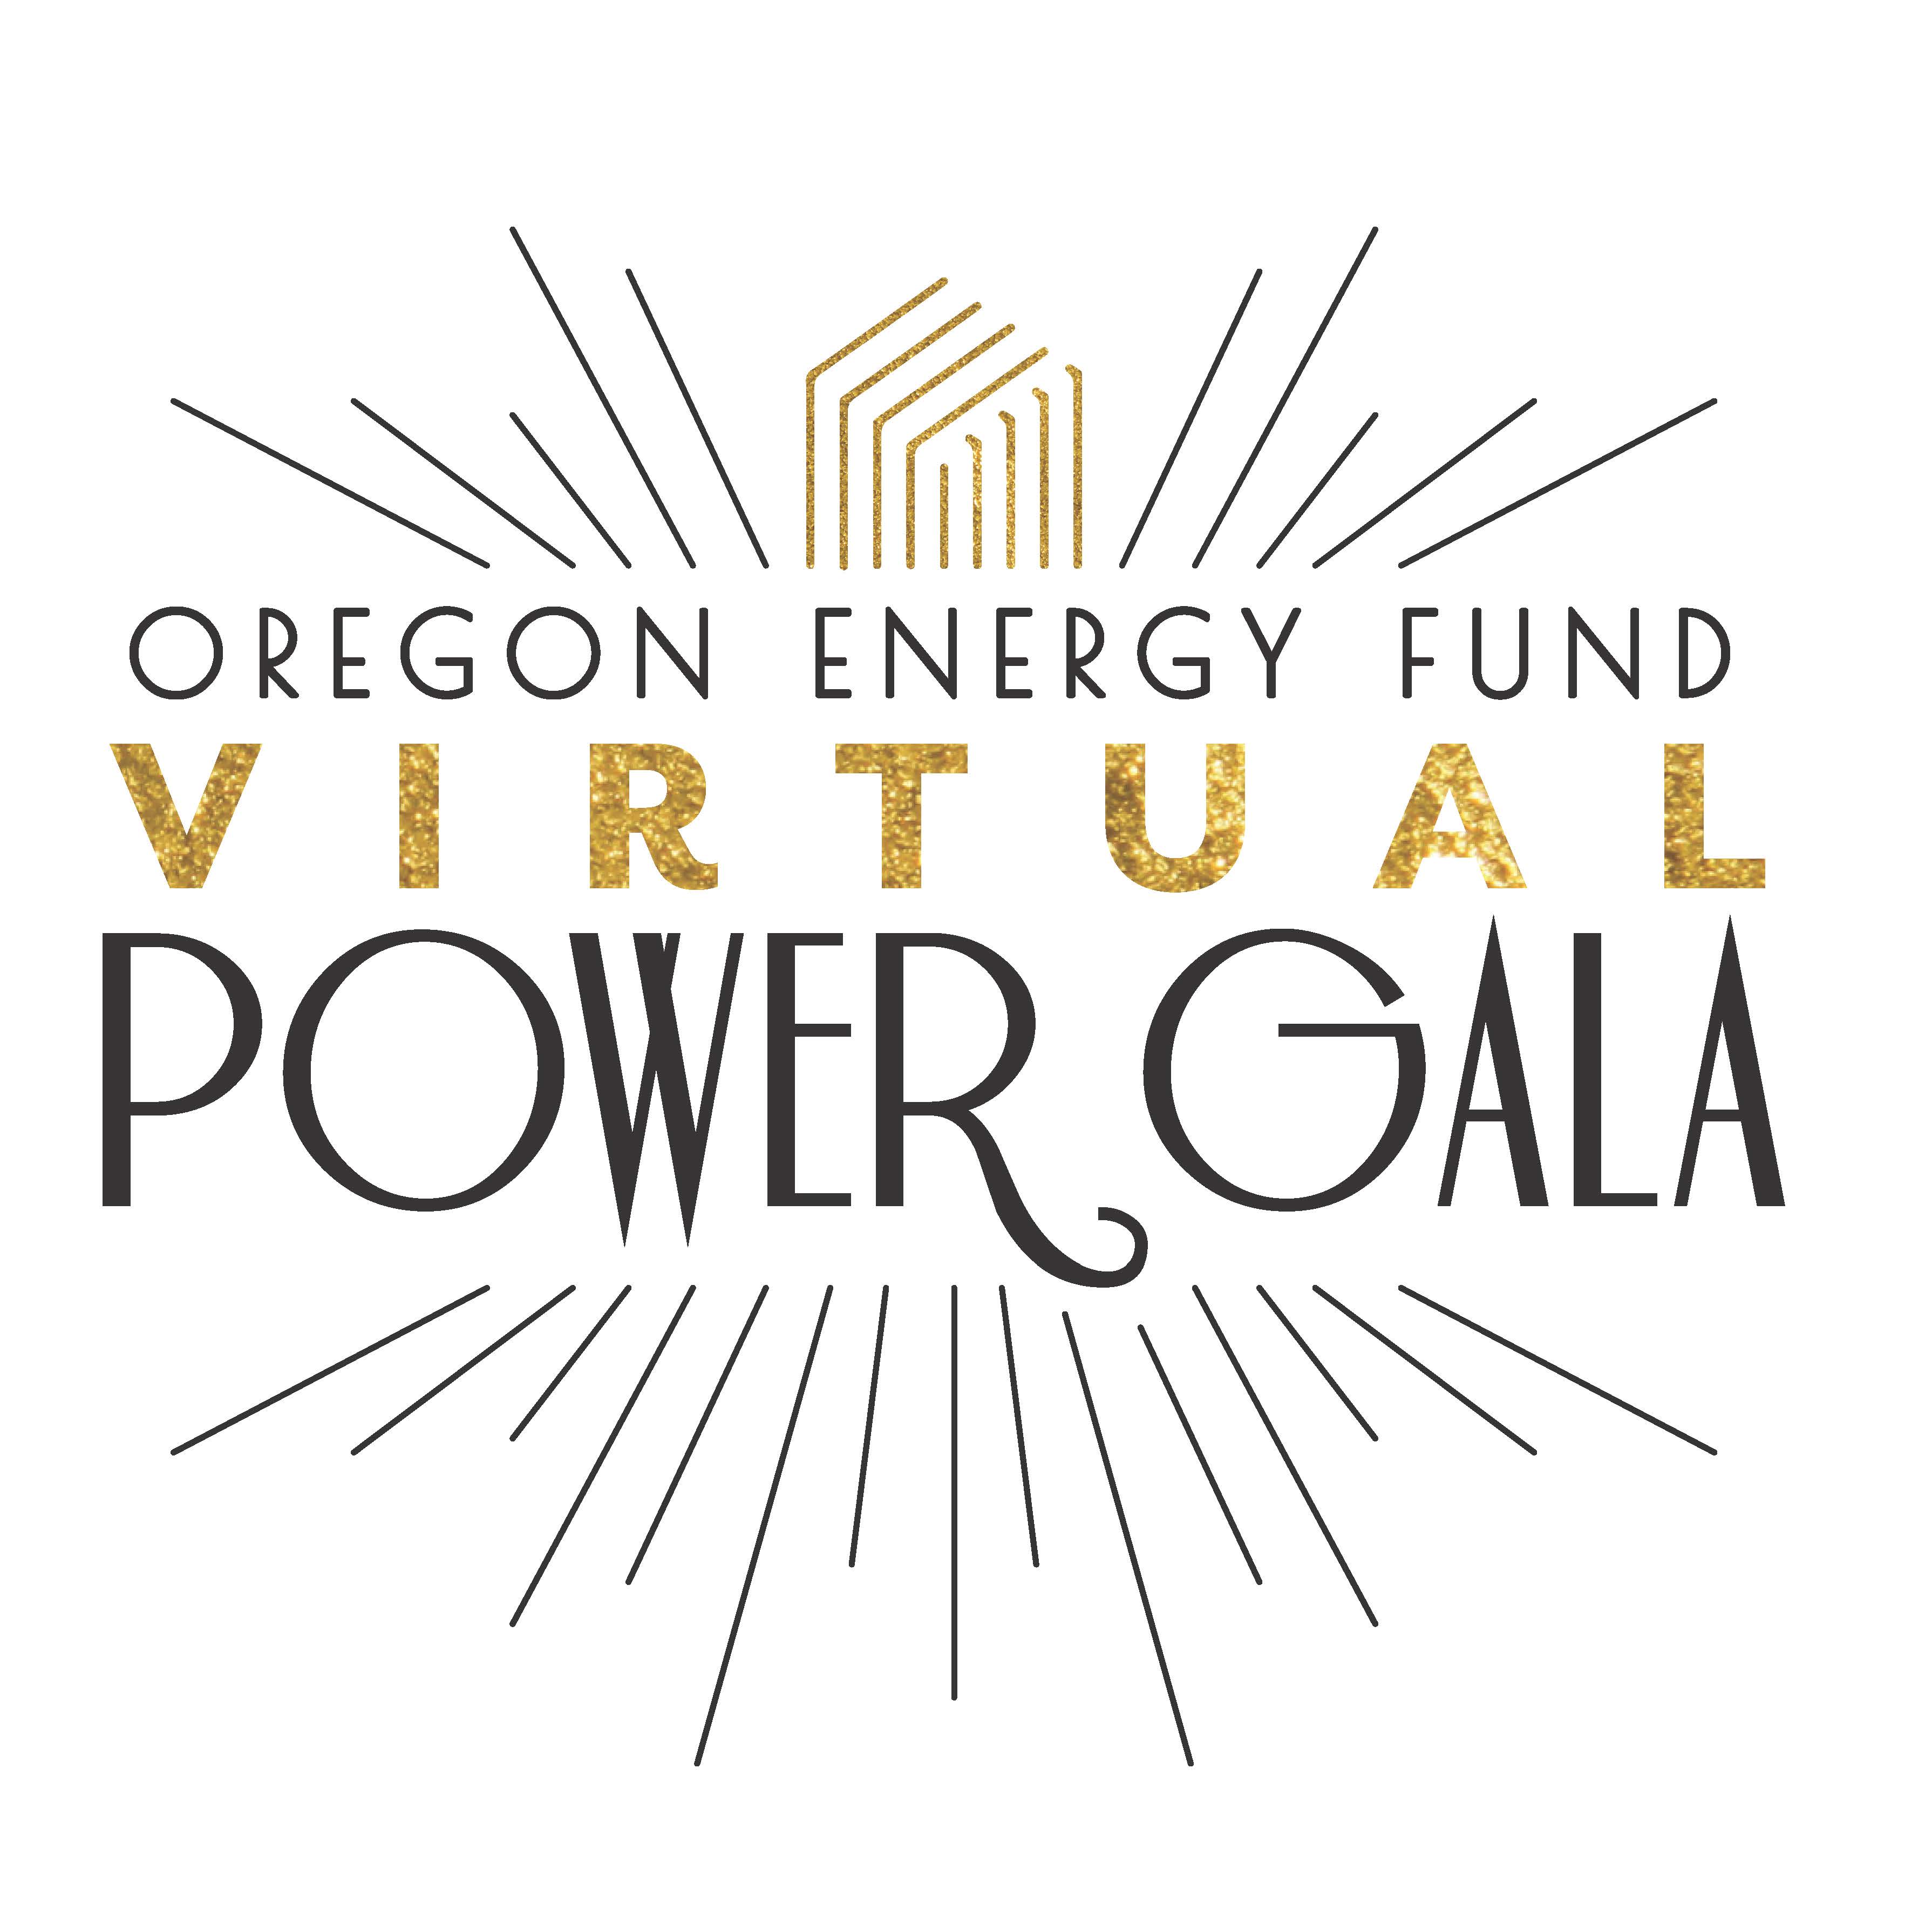 Oregon Energy Fund’s 2020 Virtual Power Gala is October 17!